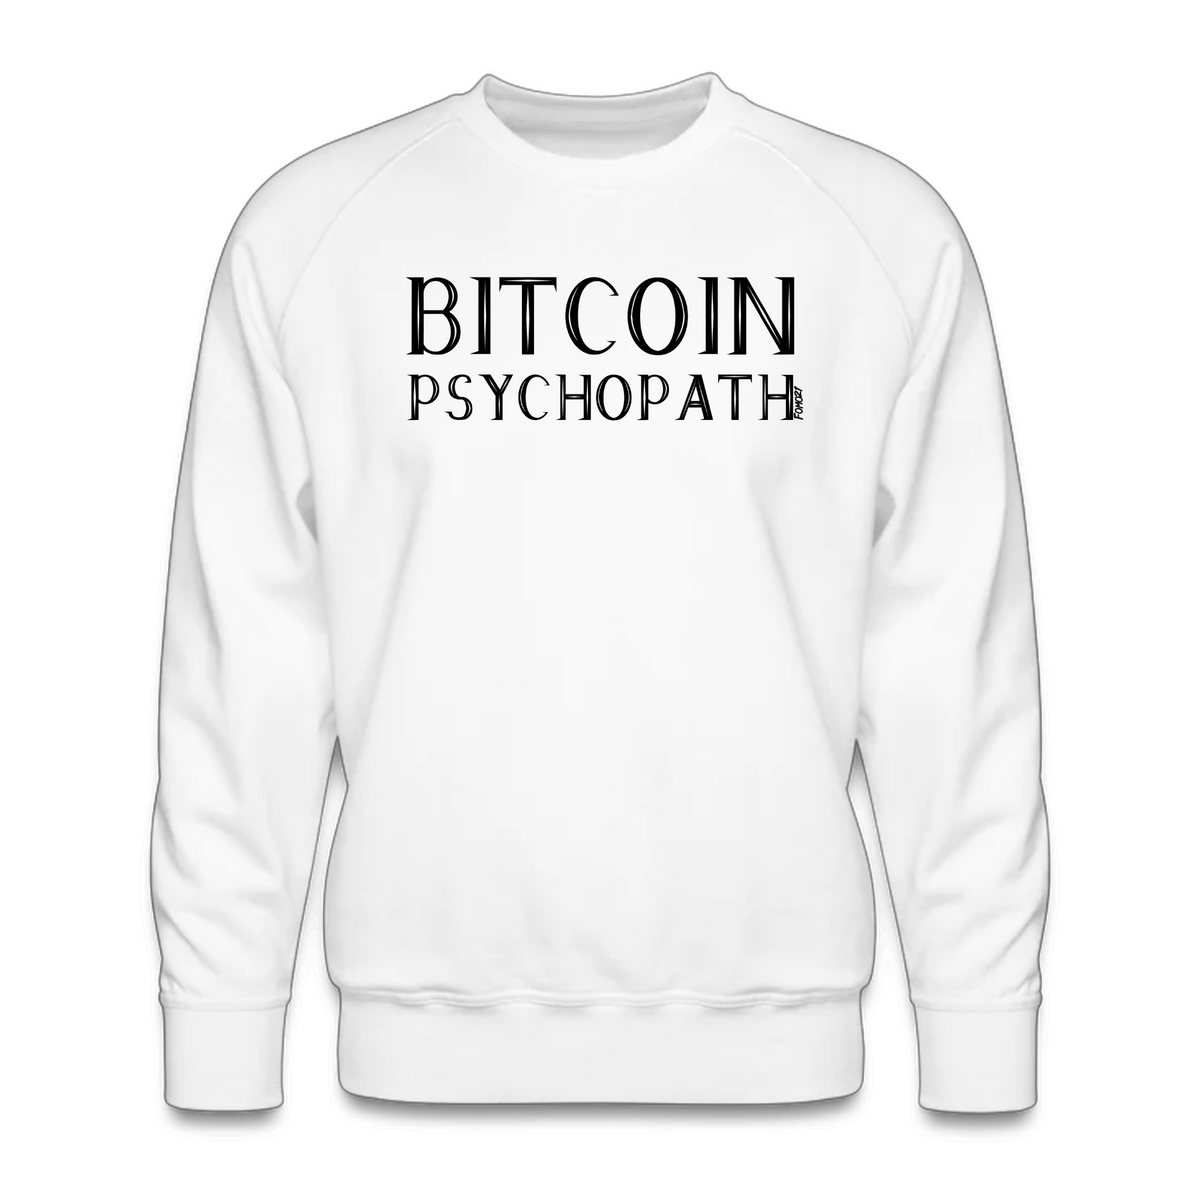 Bitcoin Psychopath Crewneck Sweatshirt - fomo21